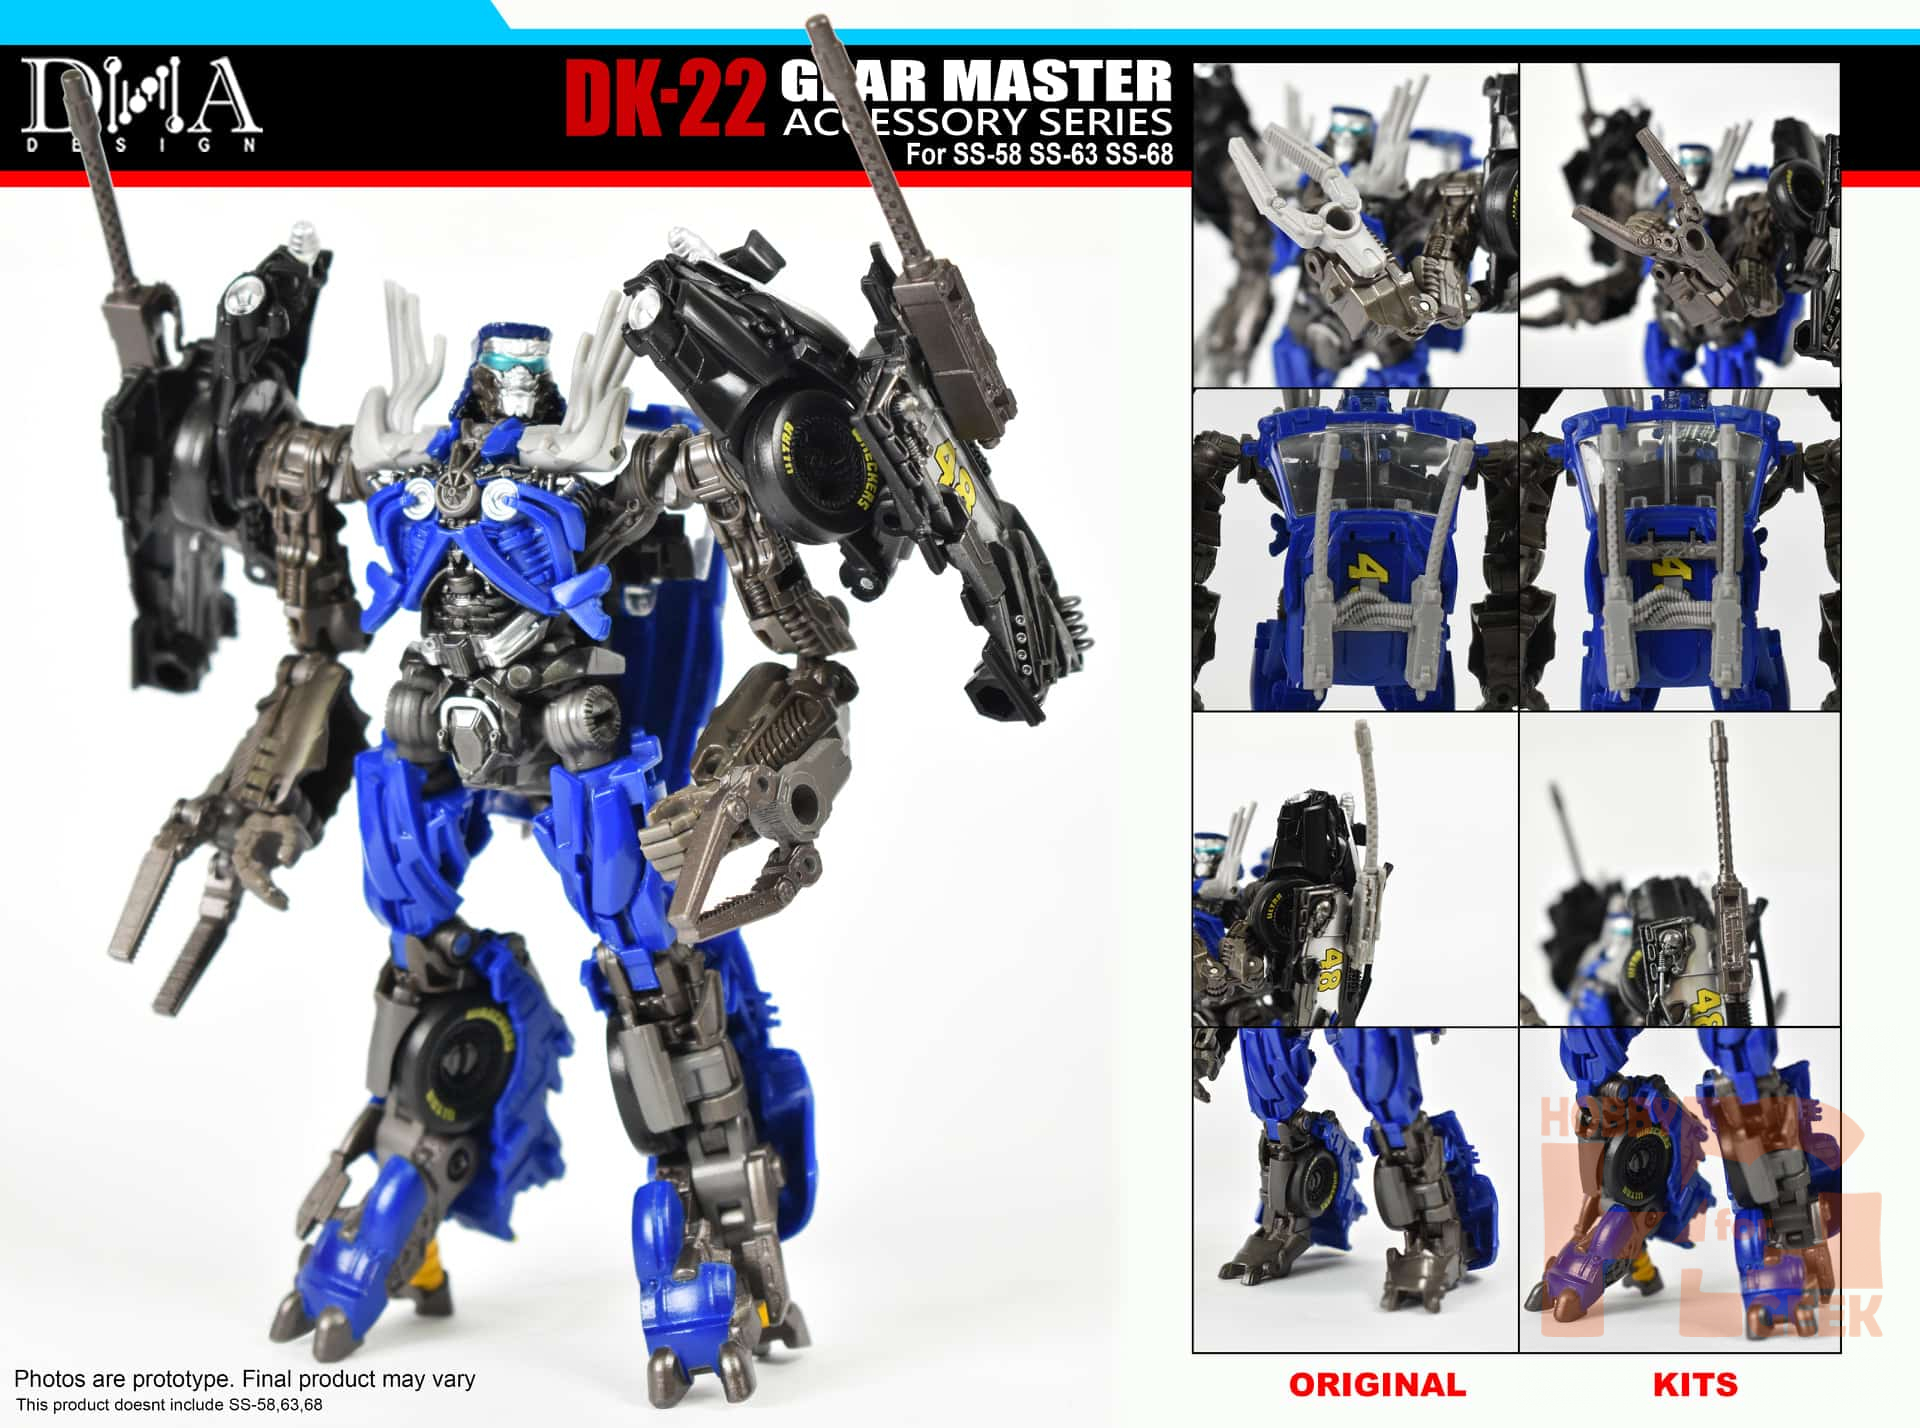 Dna Design Dk 22 Gear Master Upgrade Kit Para Ss 58 63 68